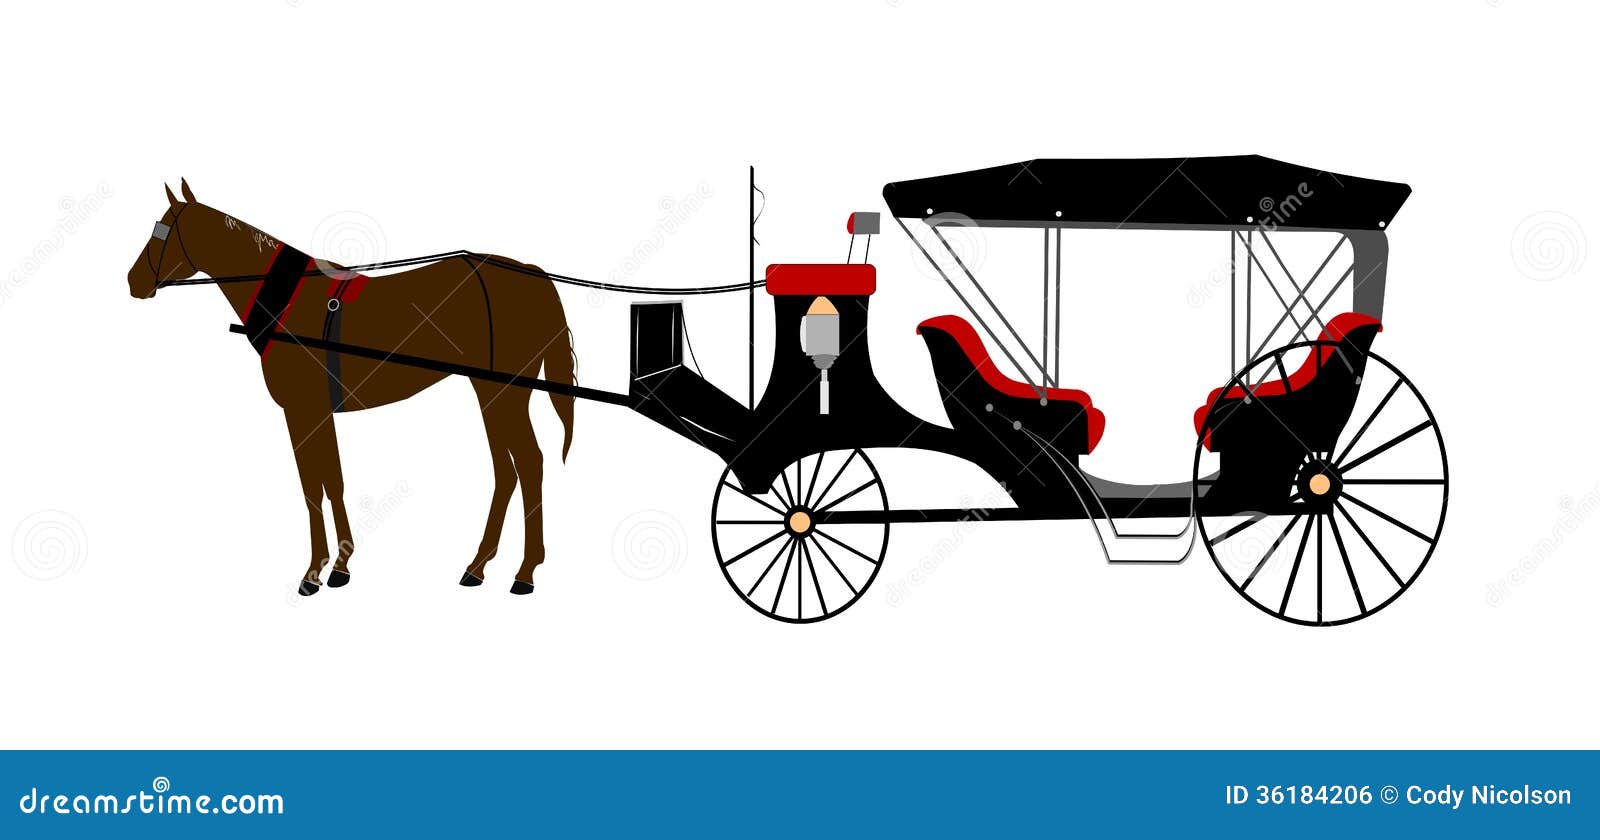 clipart horse drawn carriage - photo #43